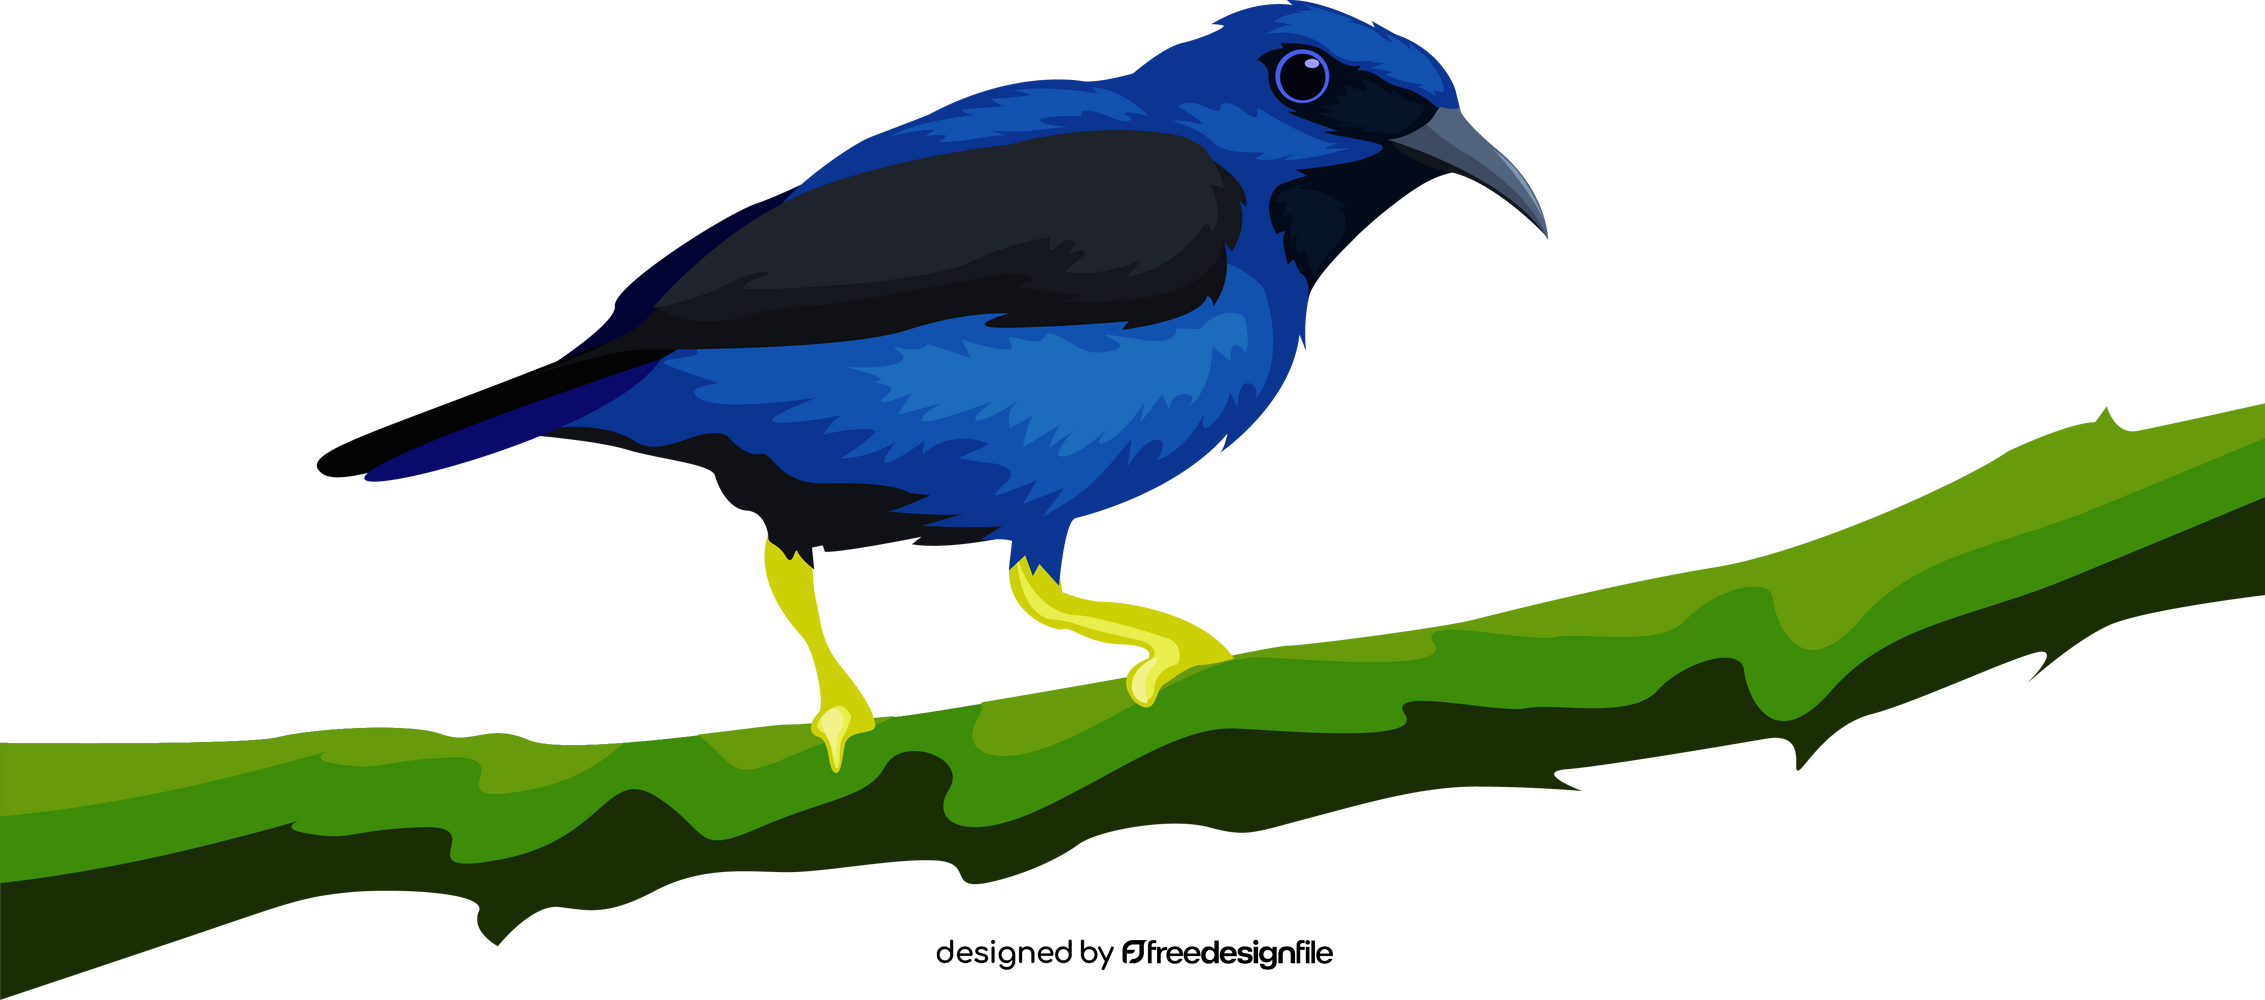 Cute blue bird clipart